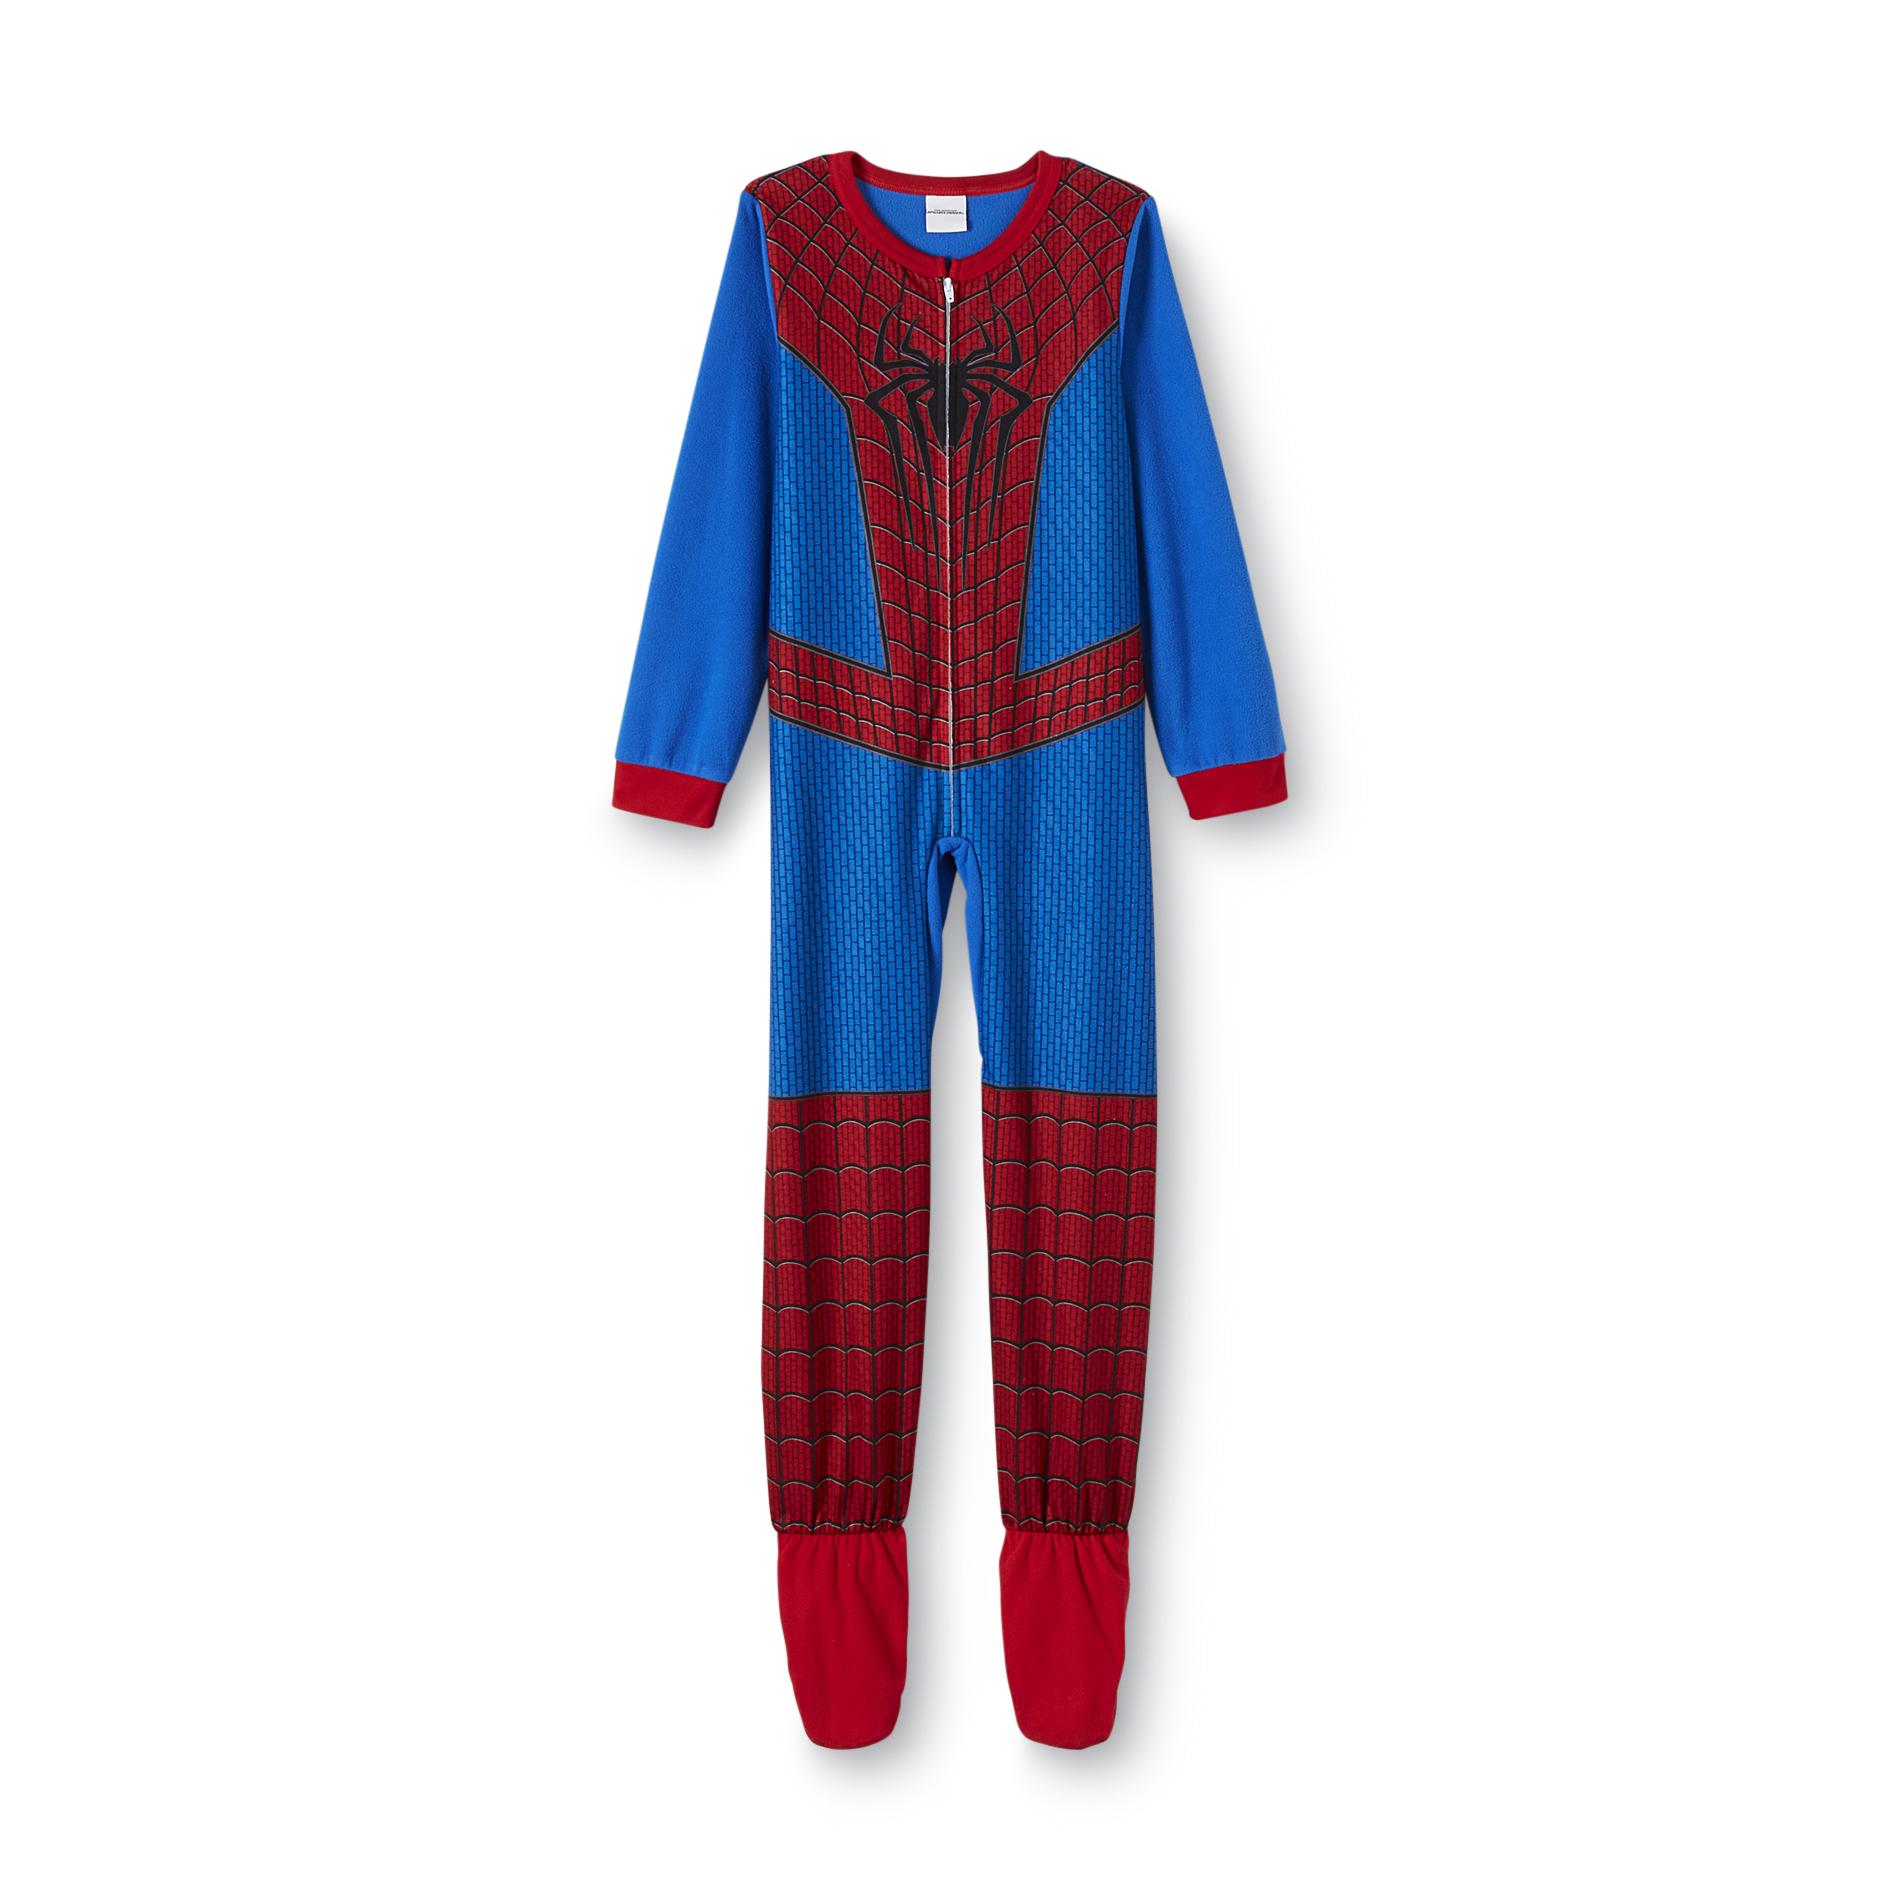 Marvel Spider-Man Boy's Footed Sleeper Pajamas